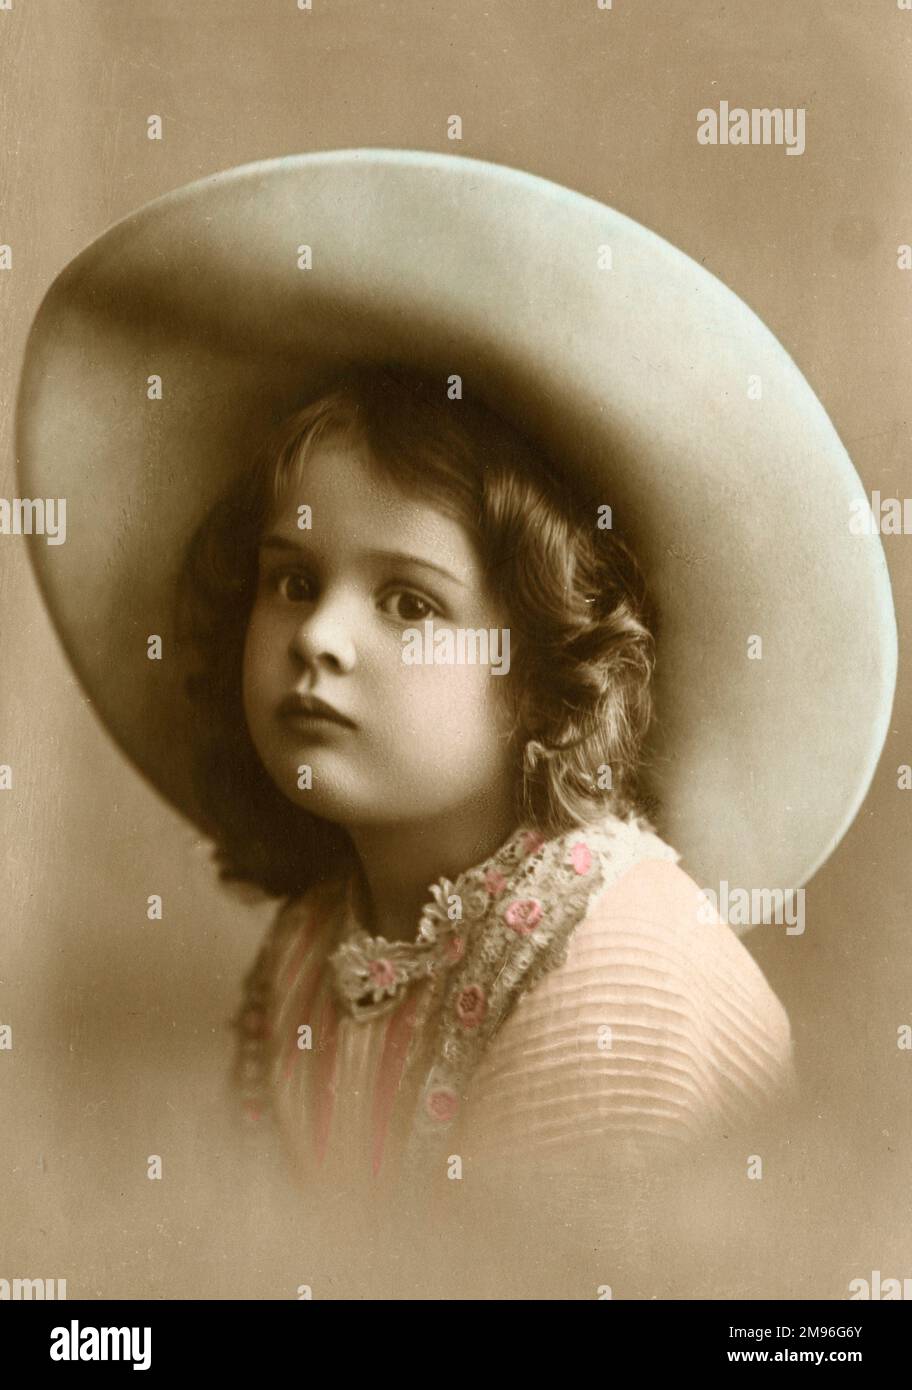 A sweet little girl wearing a wide-brimmed hat Stock Photo